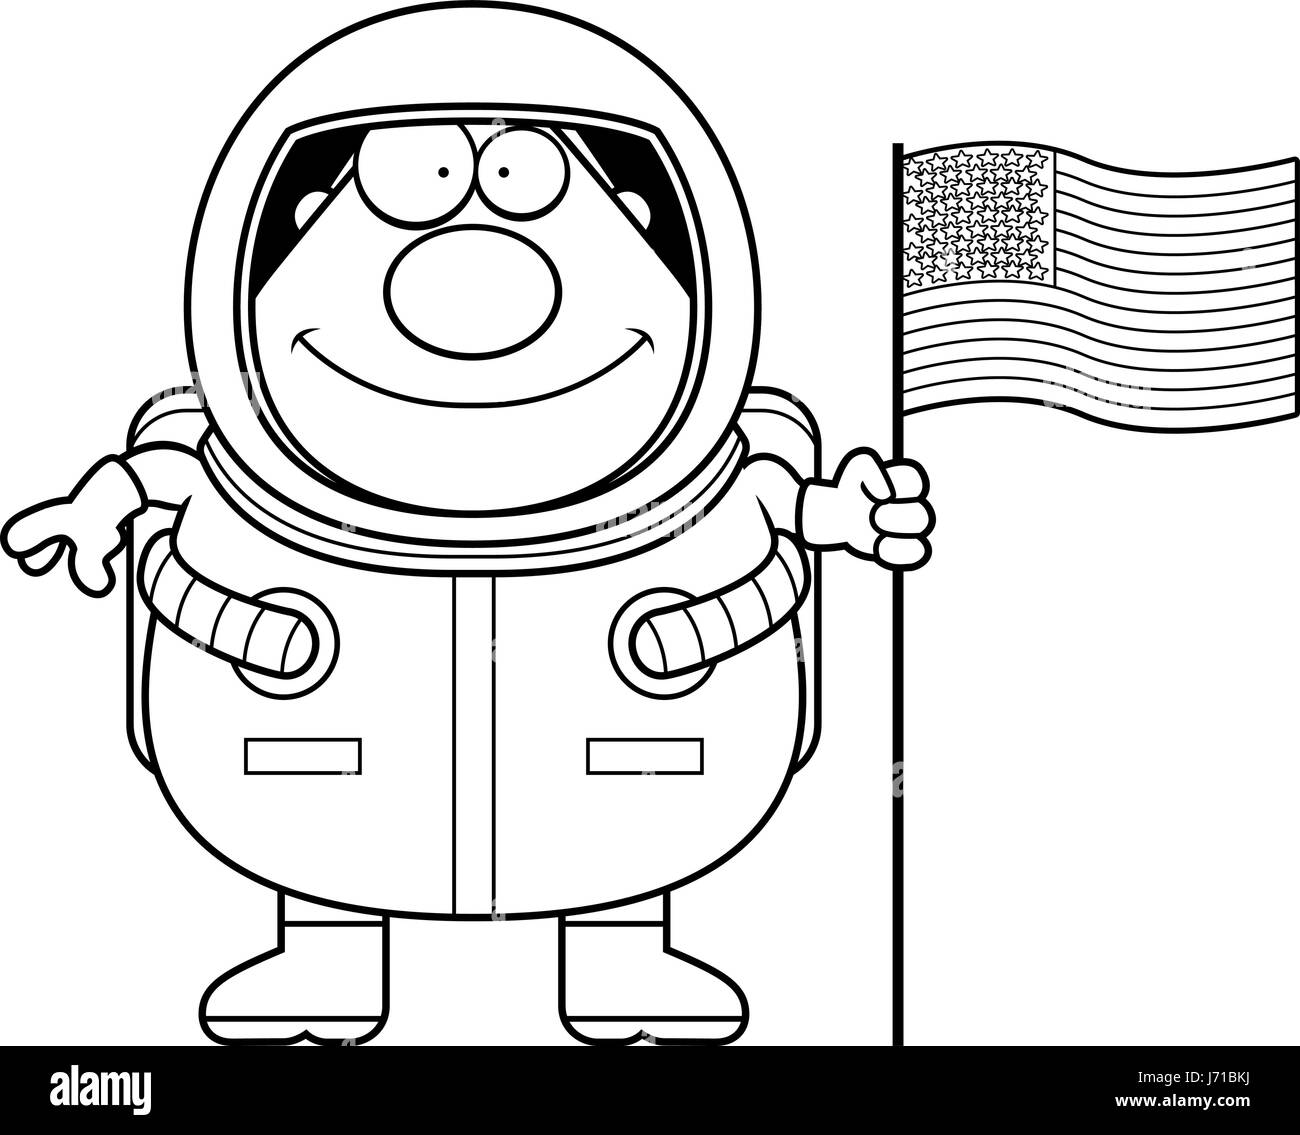 A cartoon illustration of a astronaut with an American flag. Stock Vector